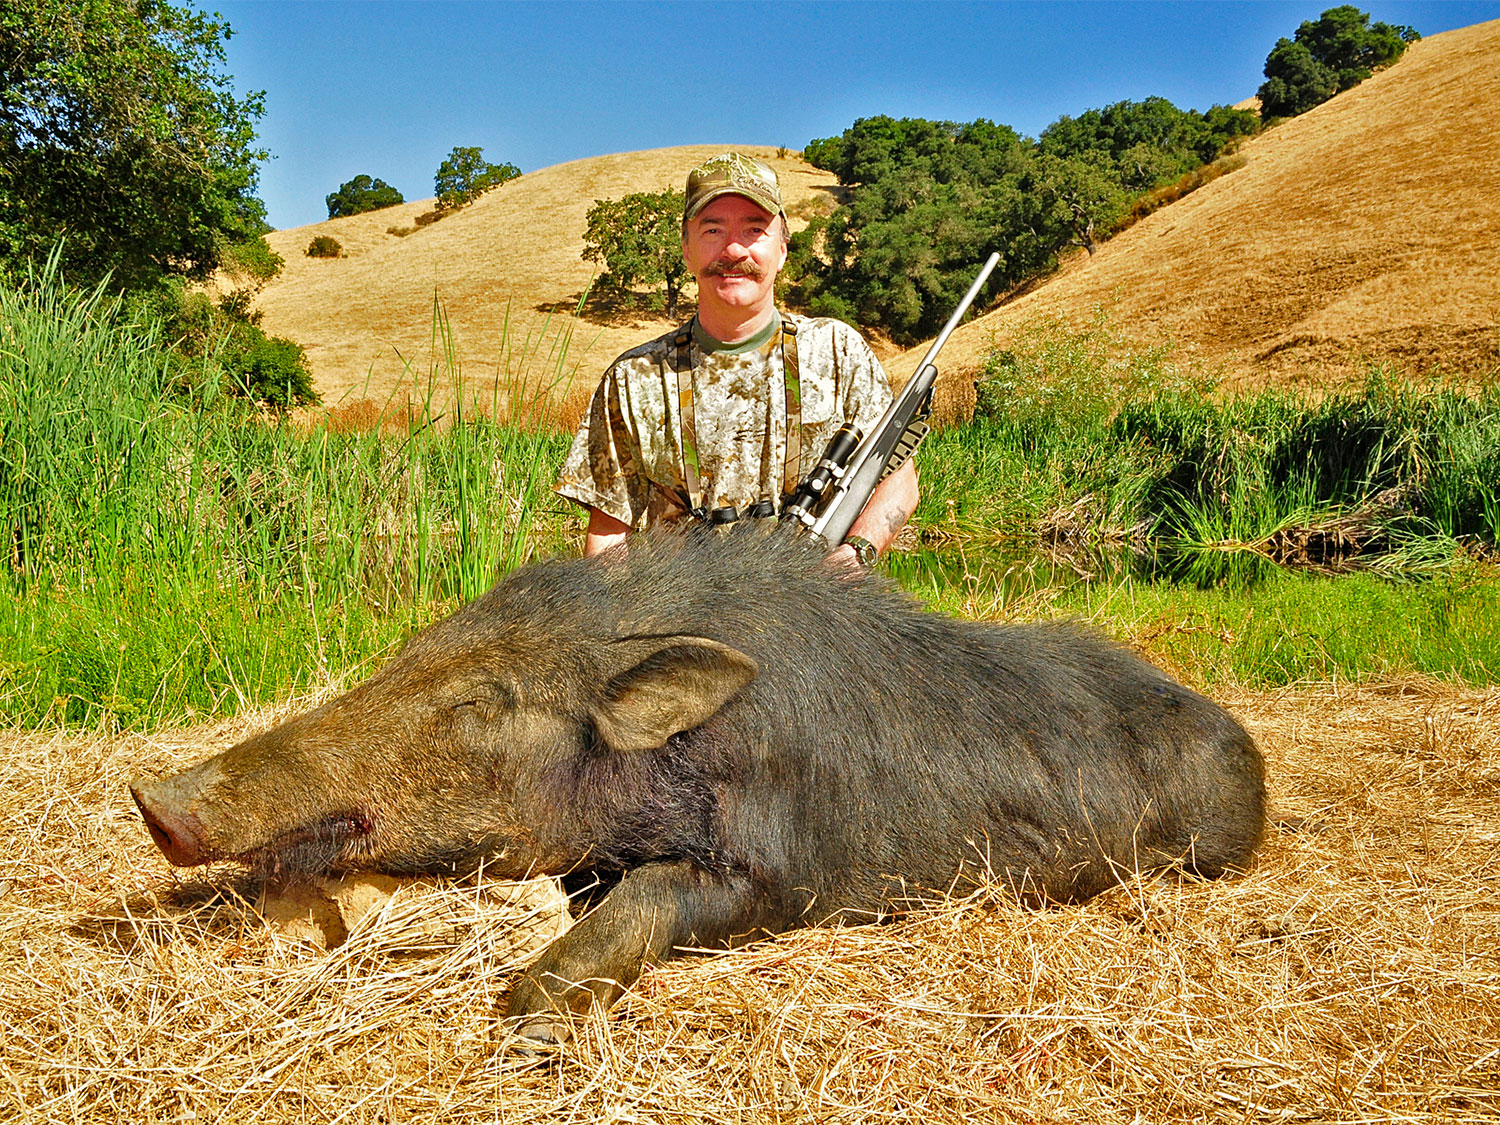 A male hunter kneeling behind a dead hog.